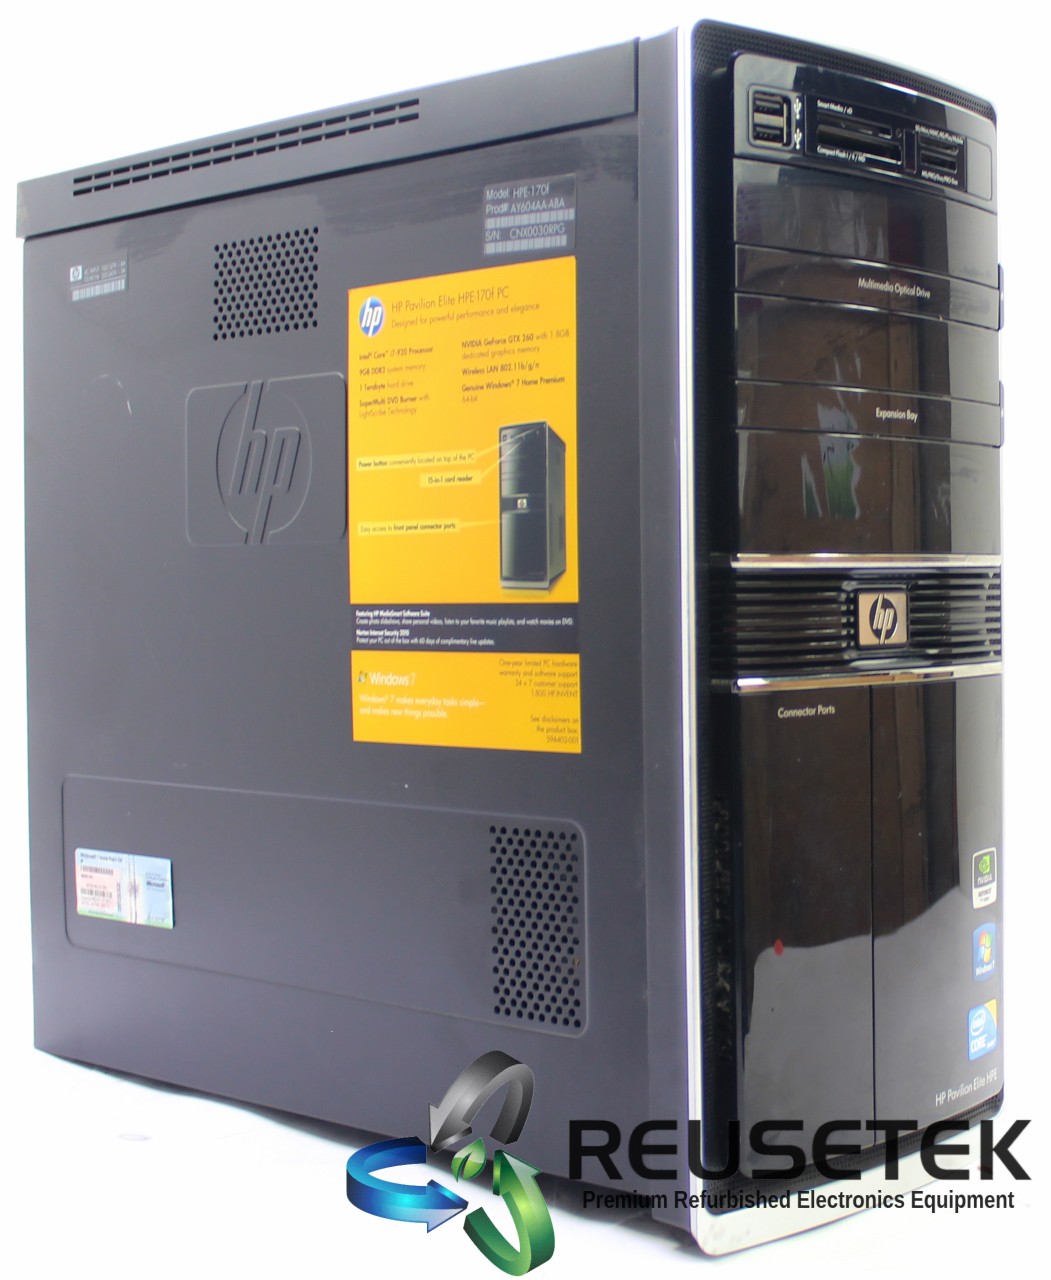 500030923-HP Pavilion Elite HPE-170f Desktop PC-image